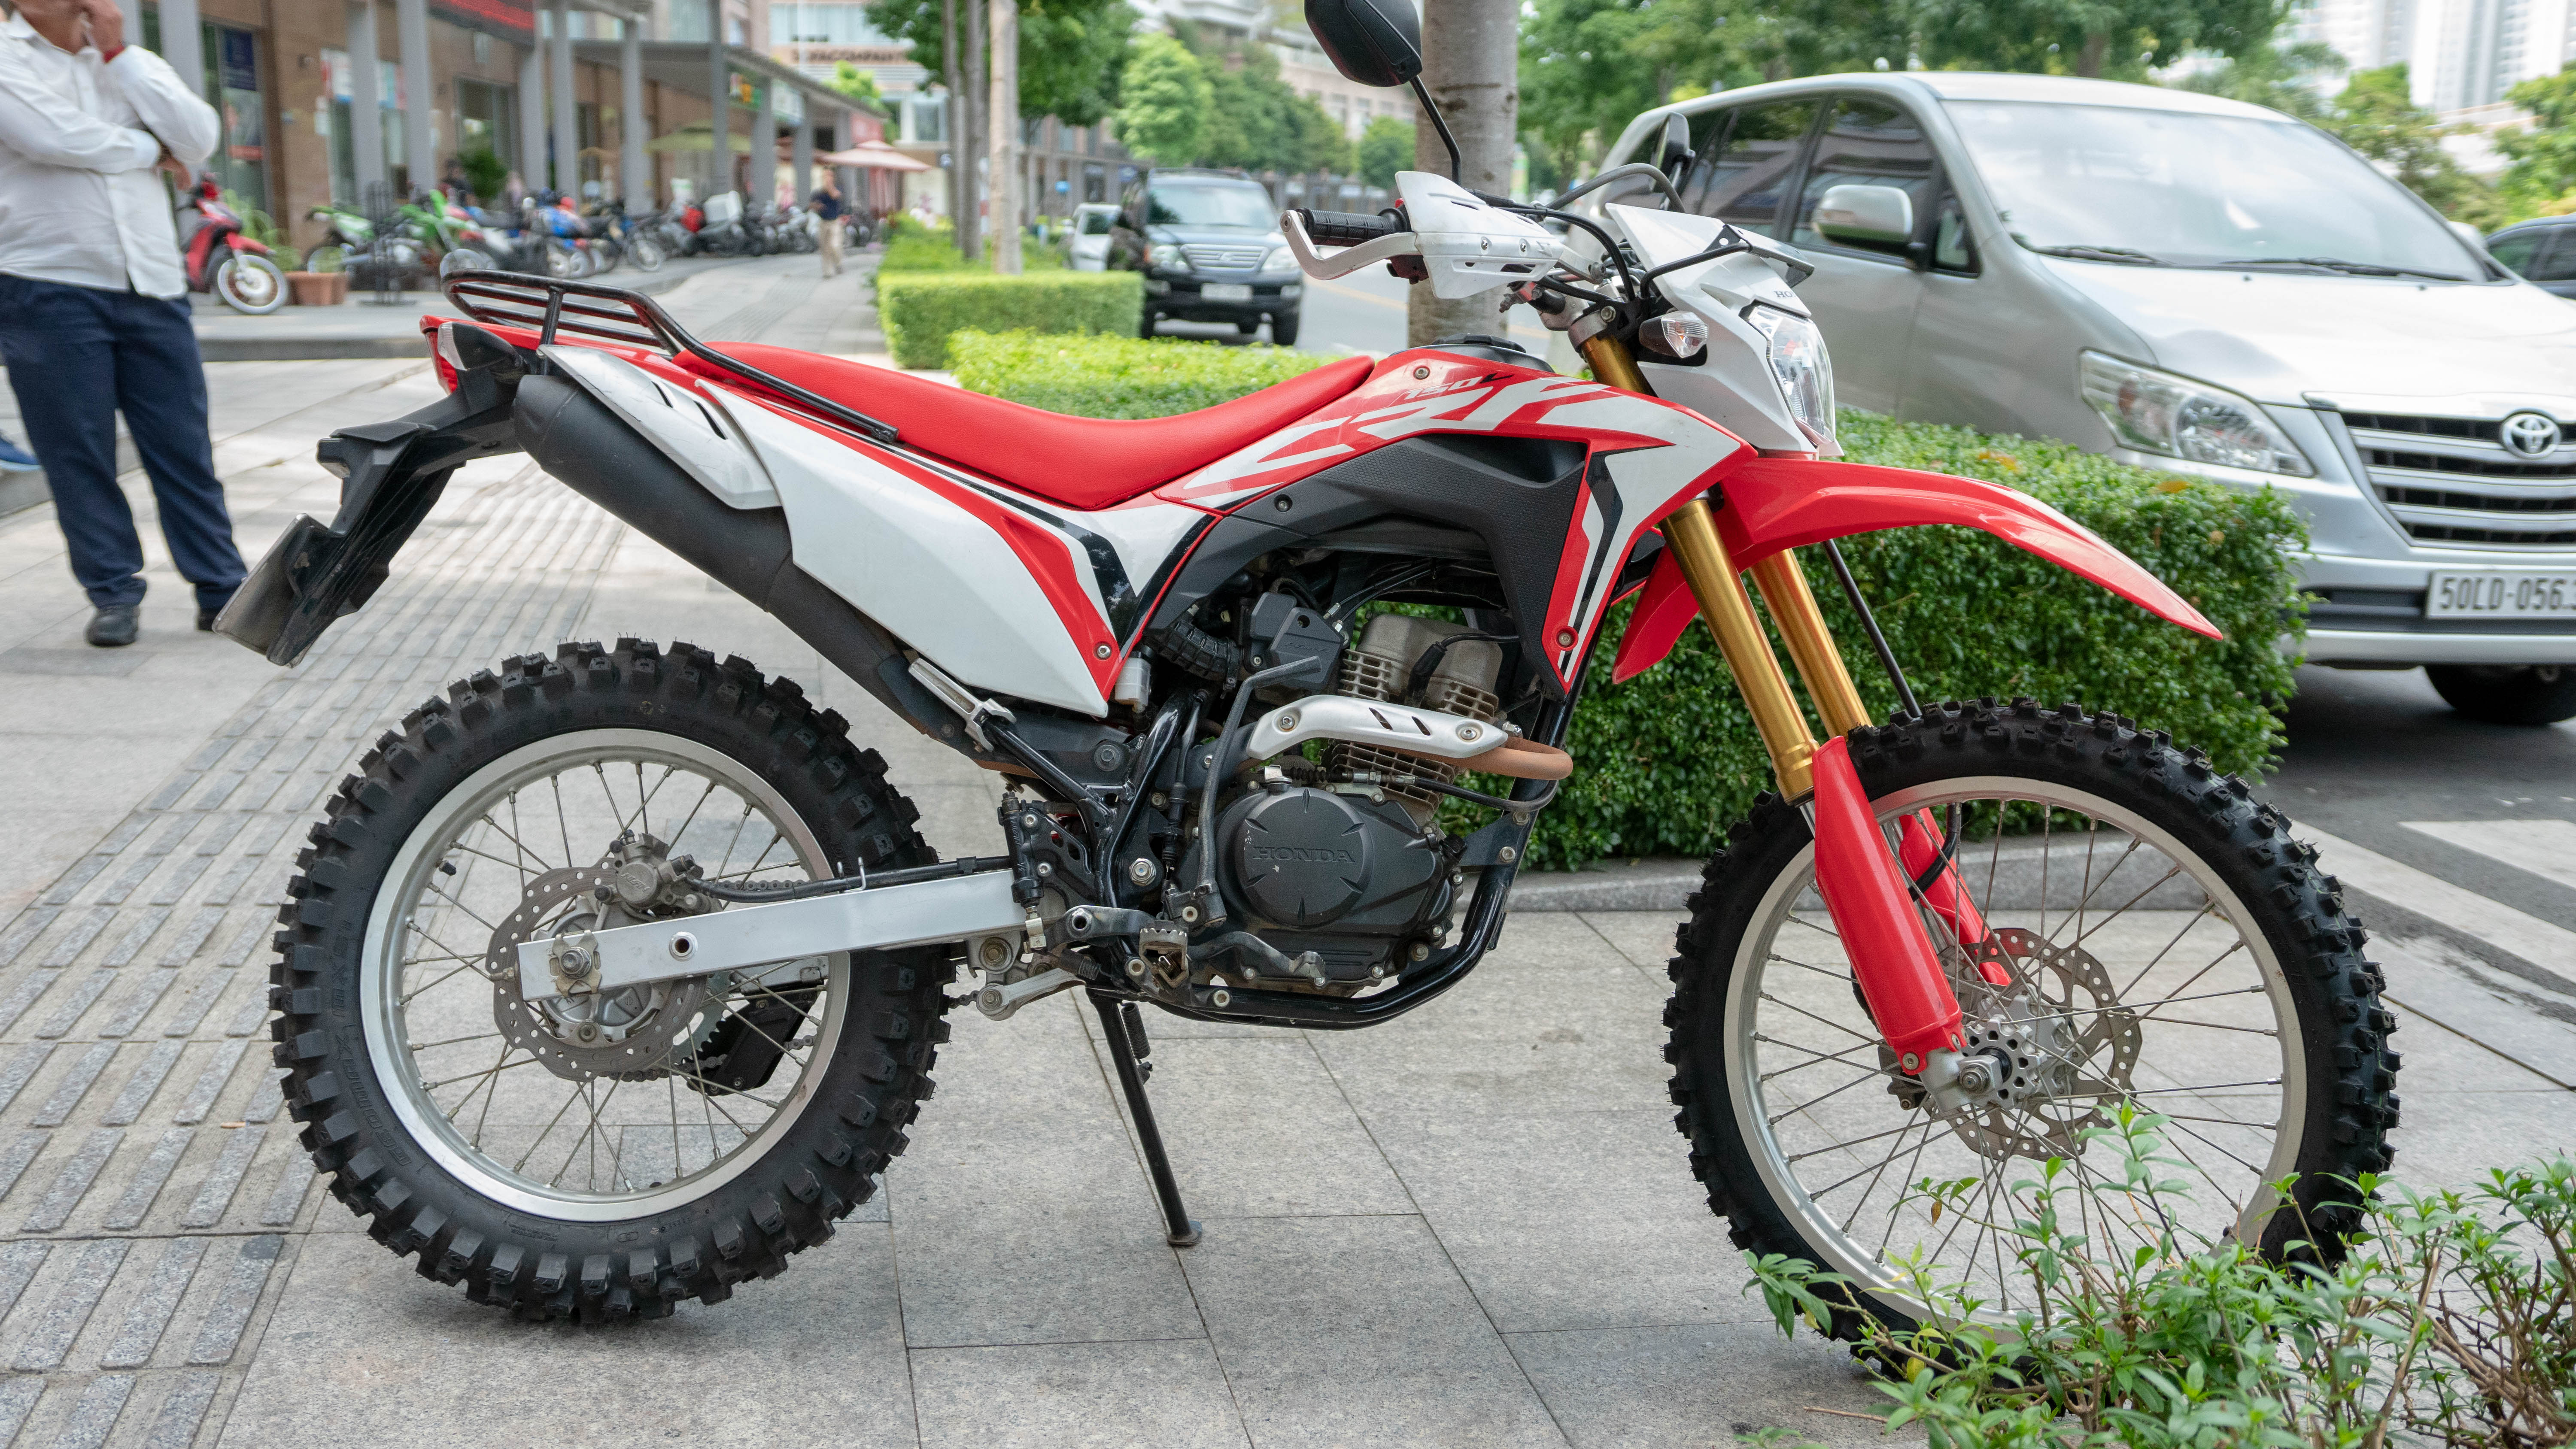 Honda CRF 150cc Tour Vietnam With Quality Motorbike Rentals